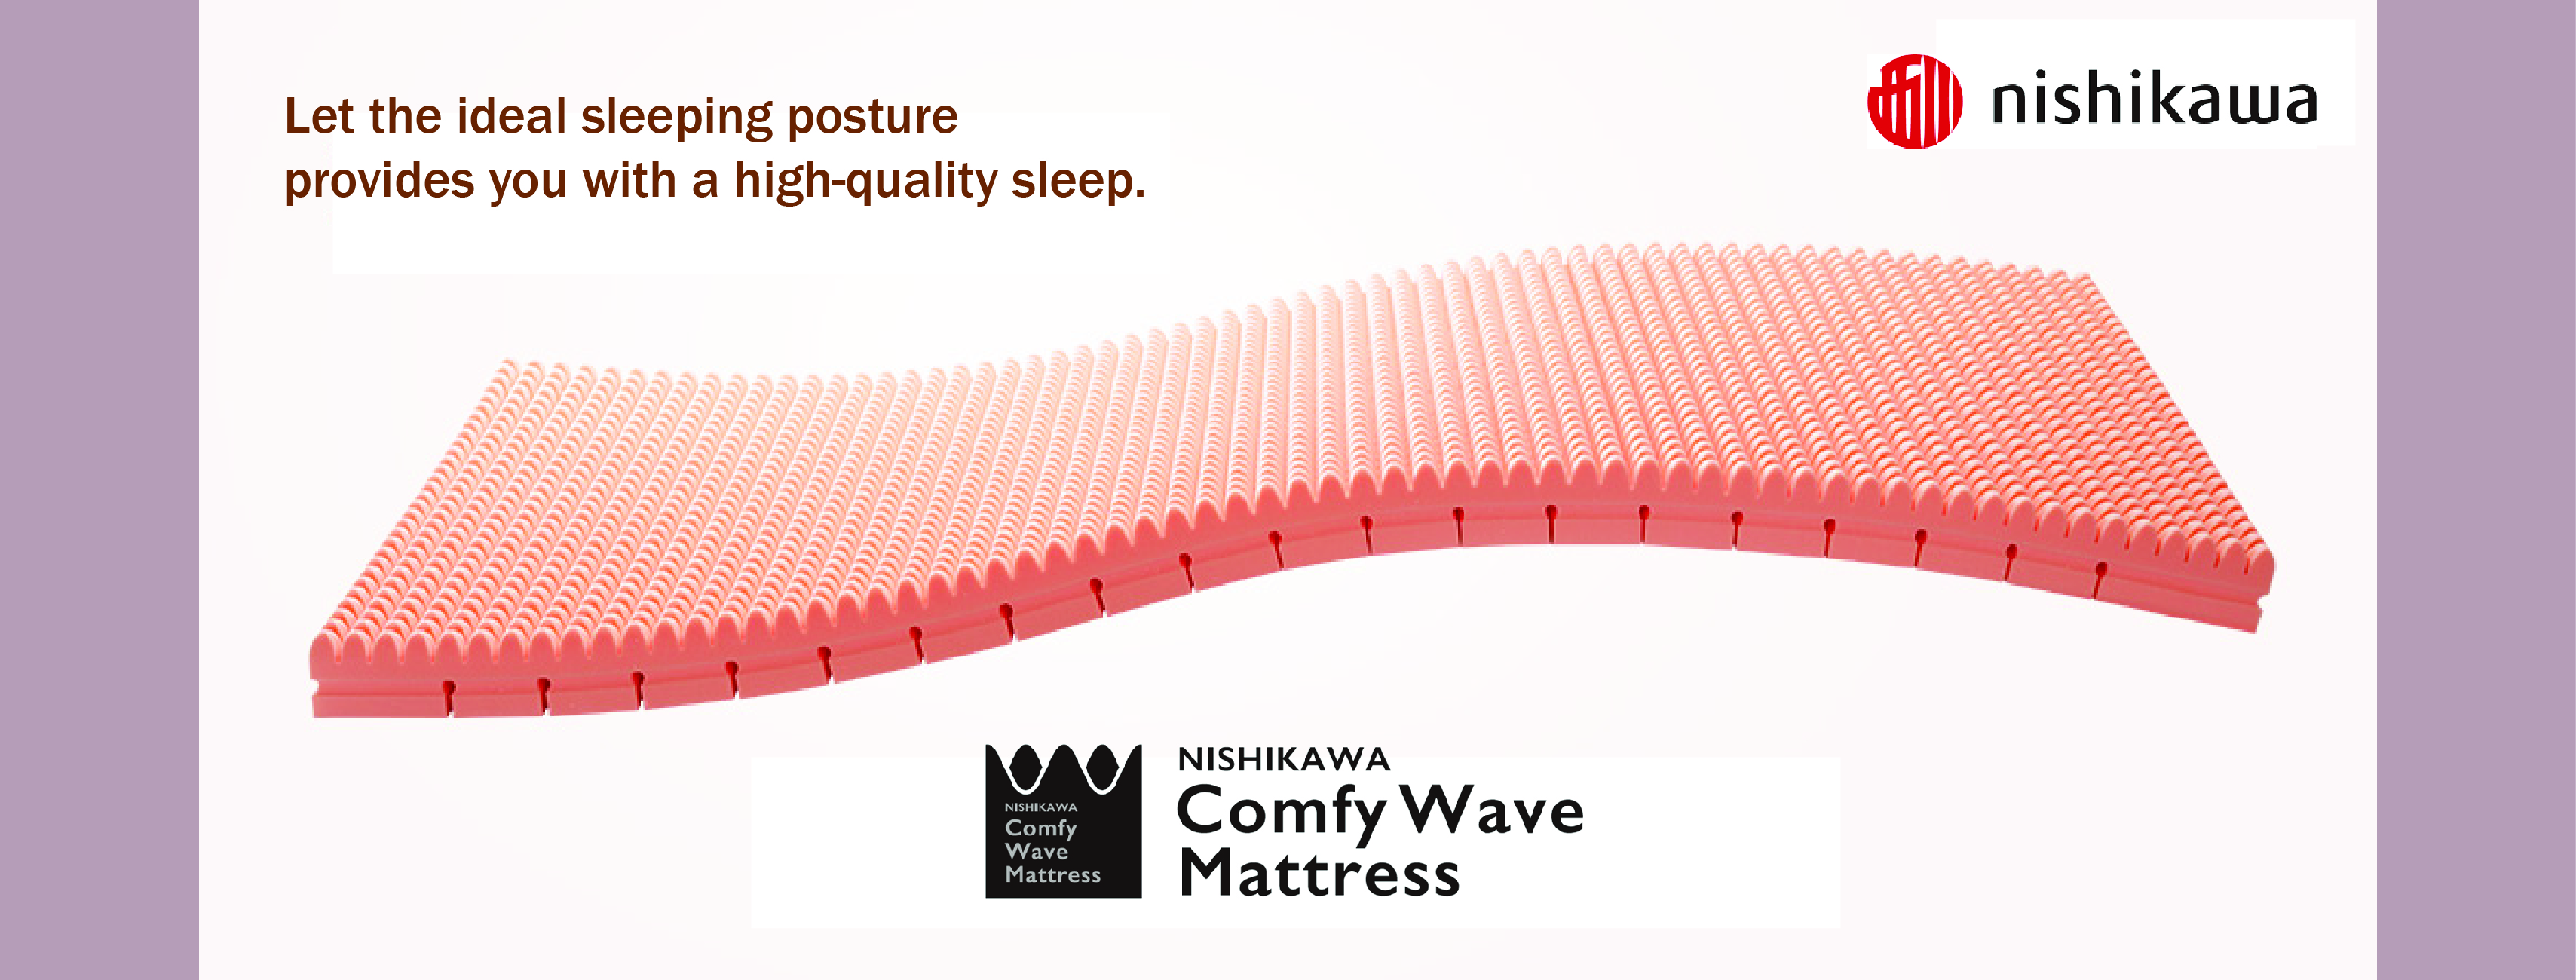 Nishikawa Comfy Wave Mattress